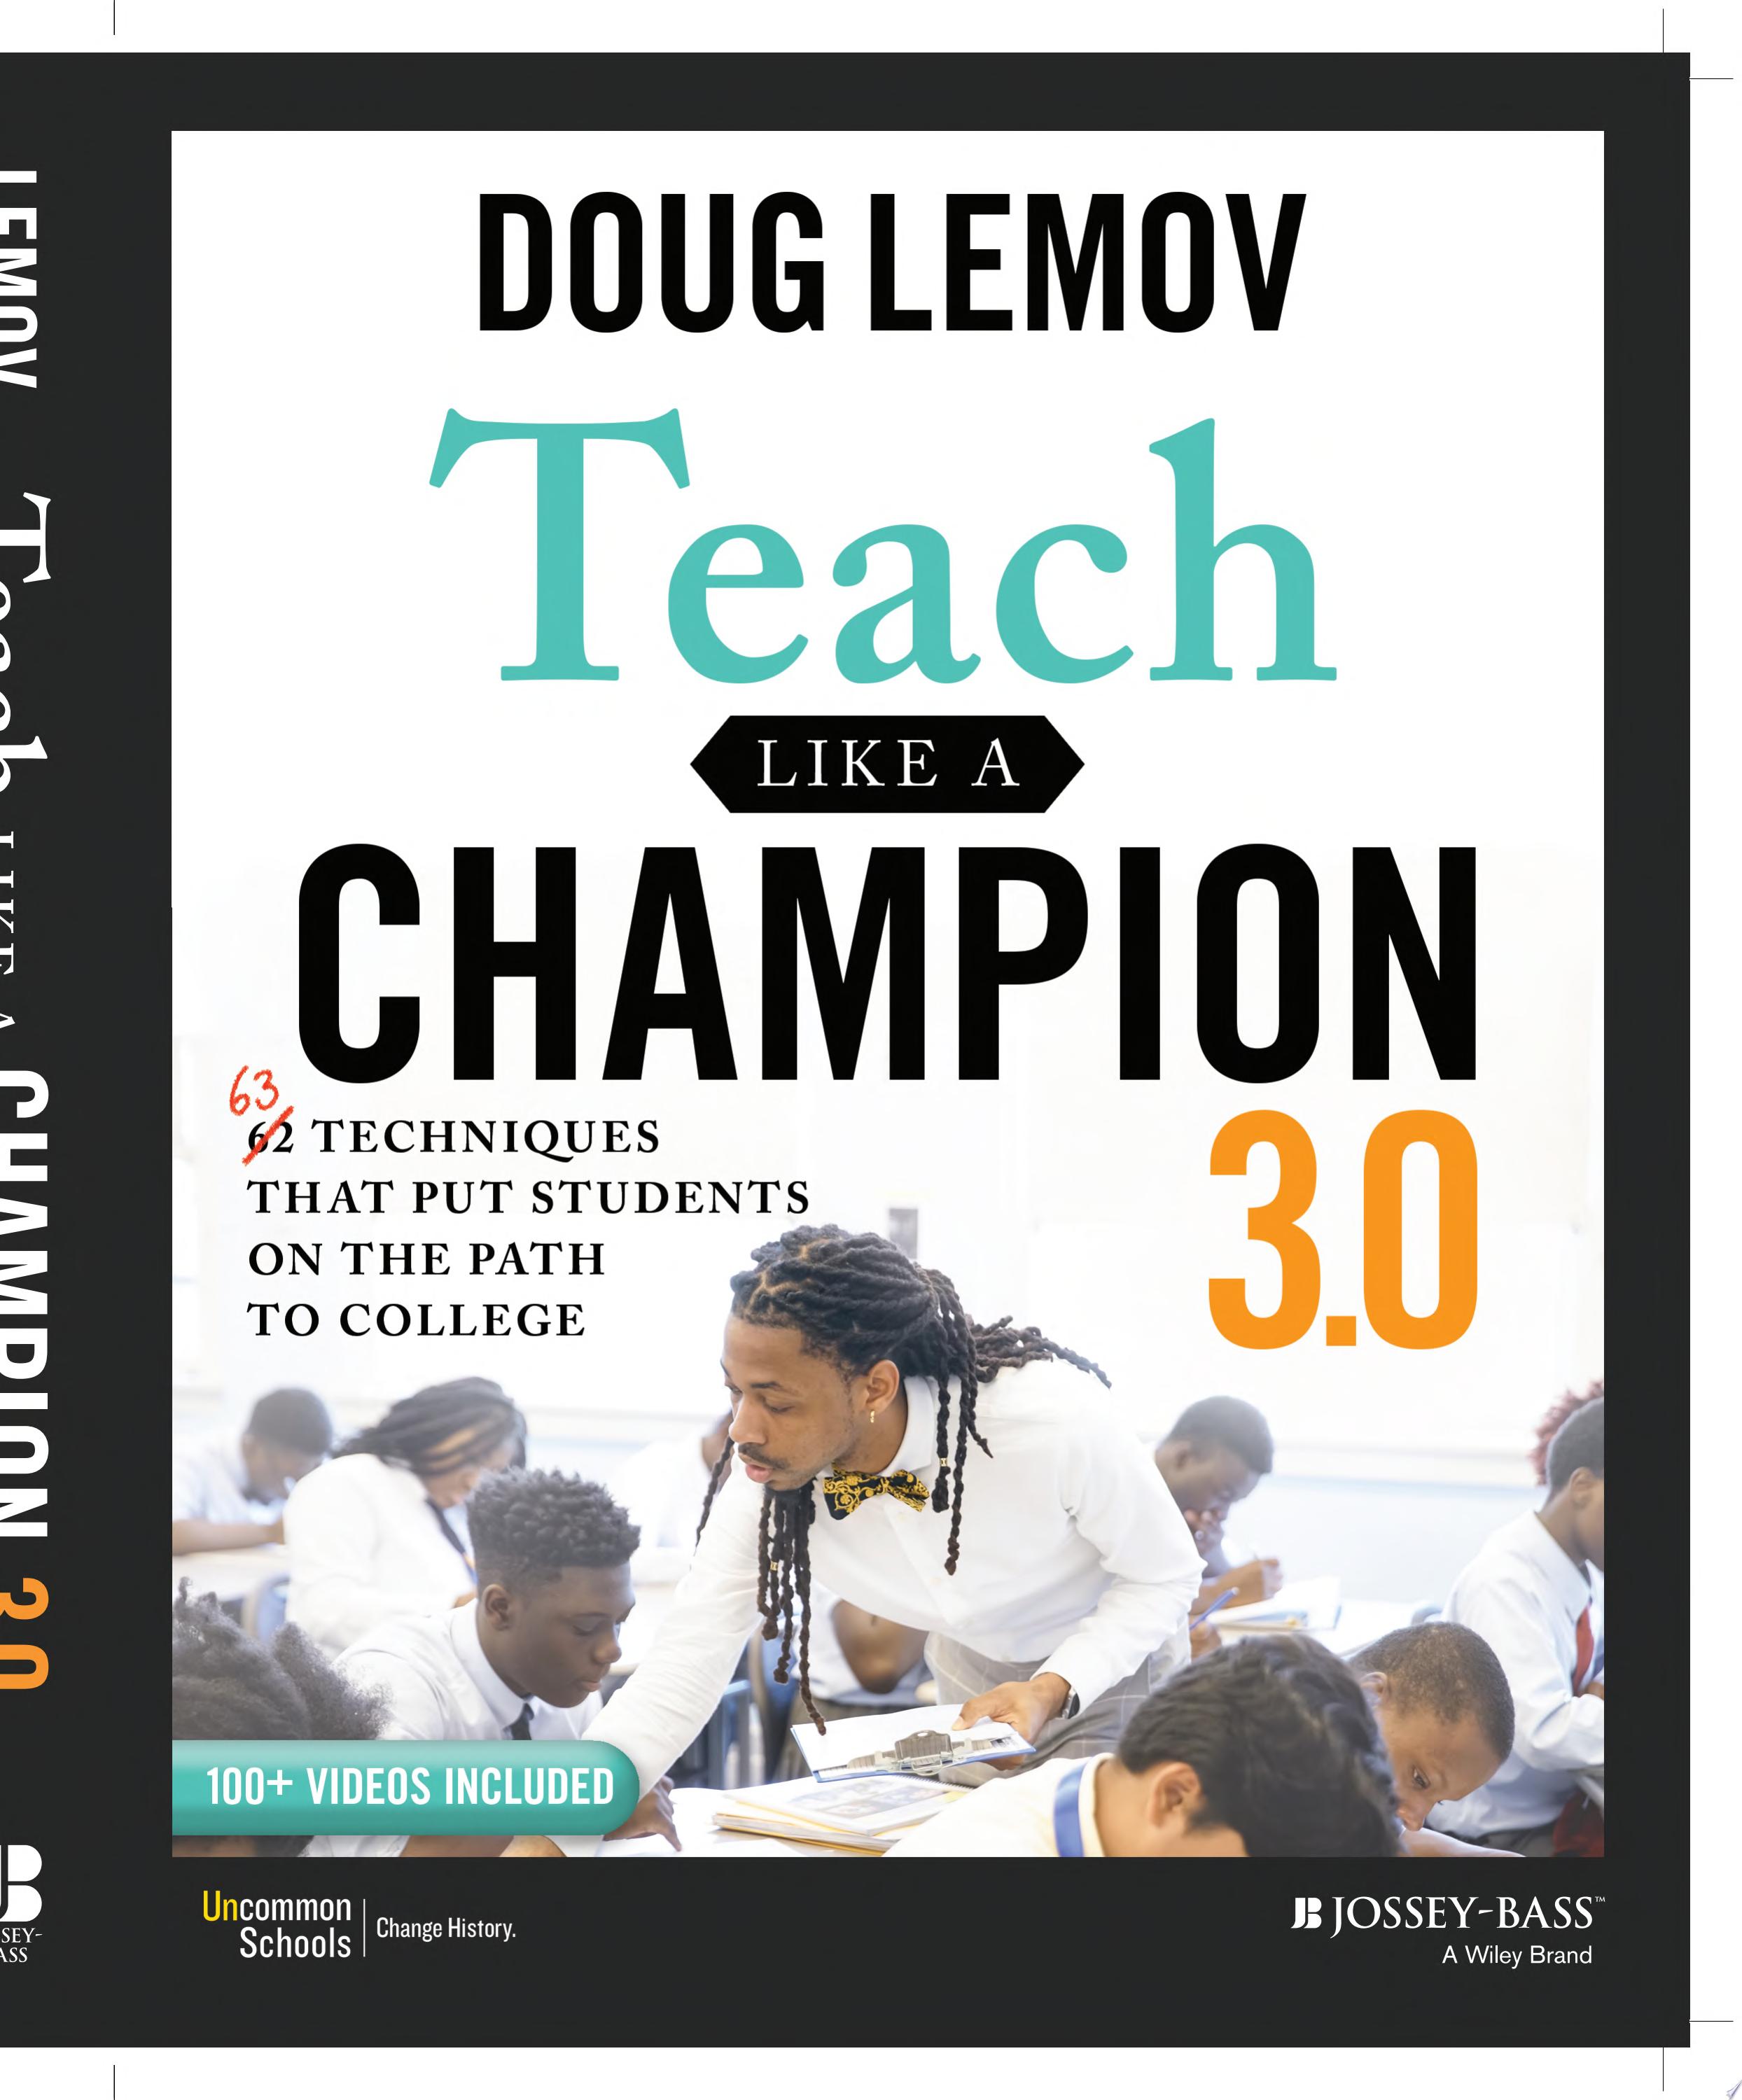 Image for "Teach Like a Champion 3.0"